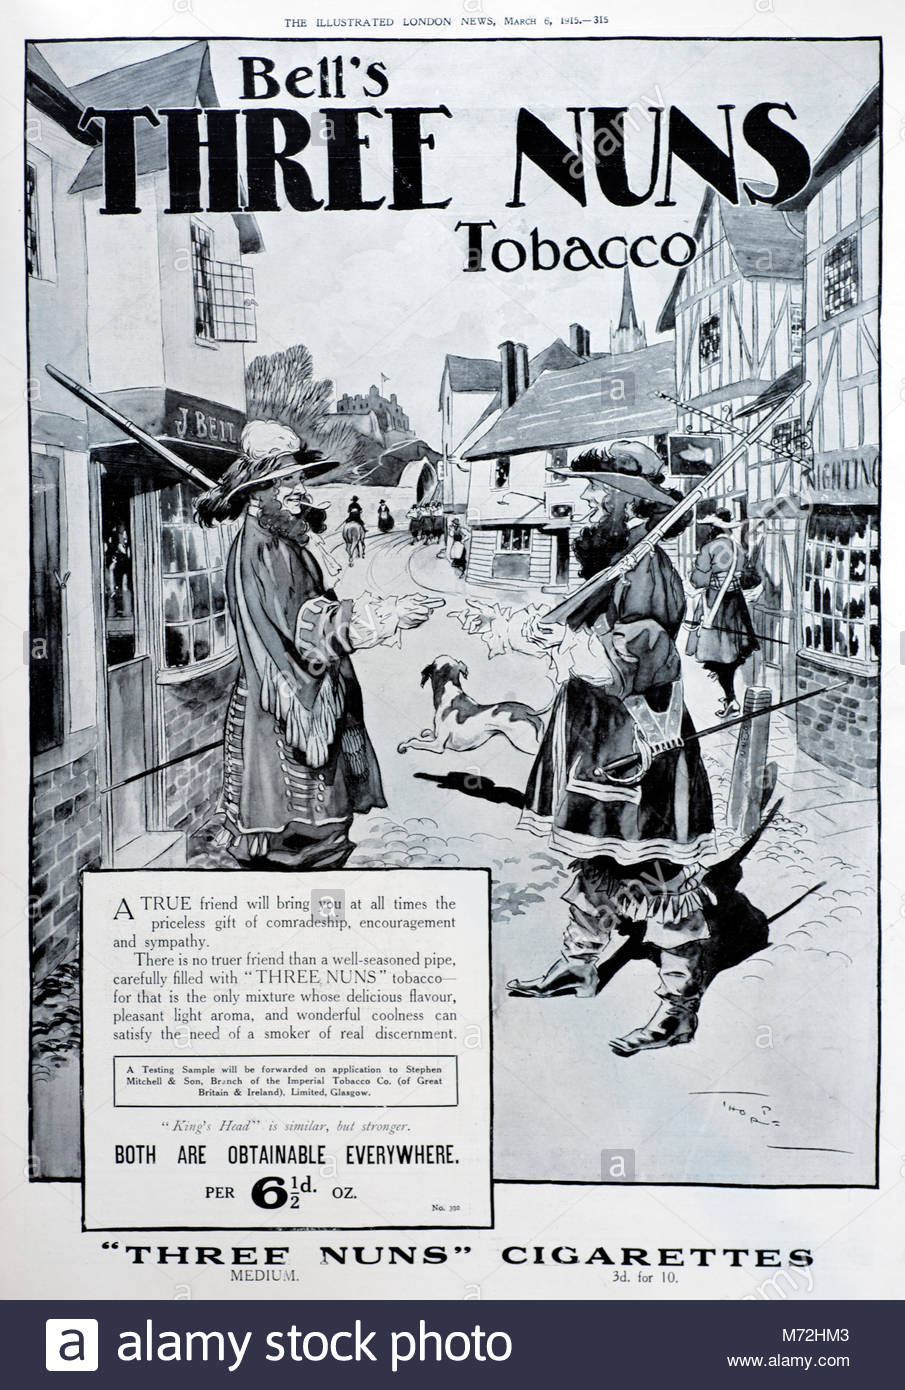 Bell's Three Nuns Tobacco vintage advertising 1915 Stock Photo